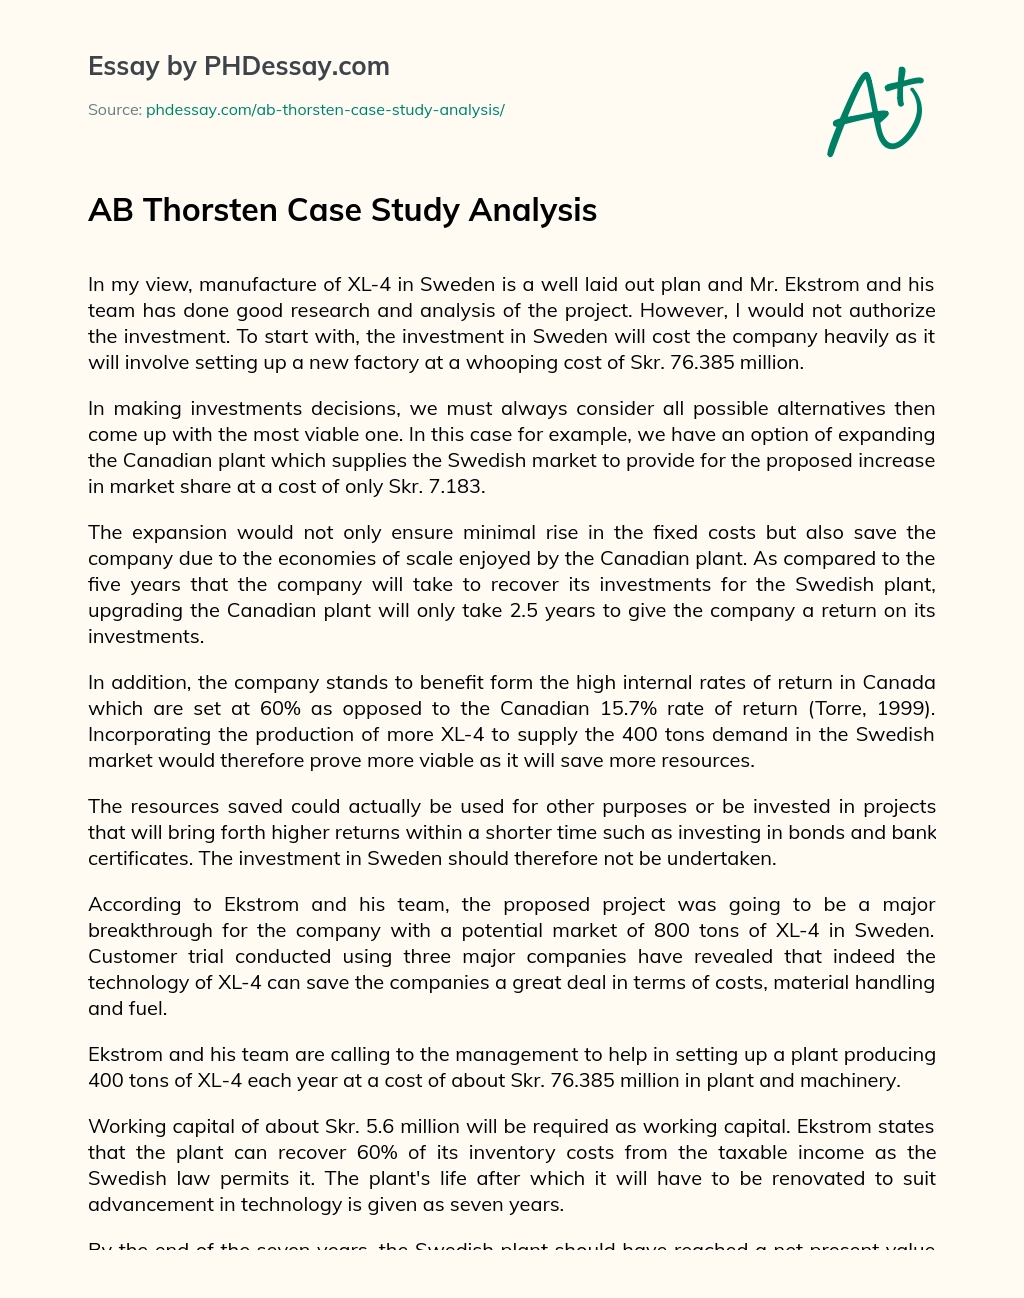 AB Thorsten Case Study Analysis essay